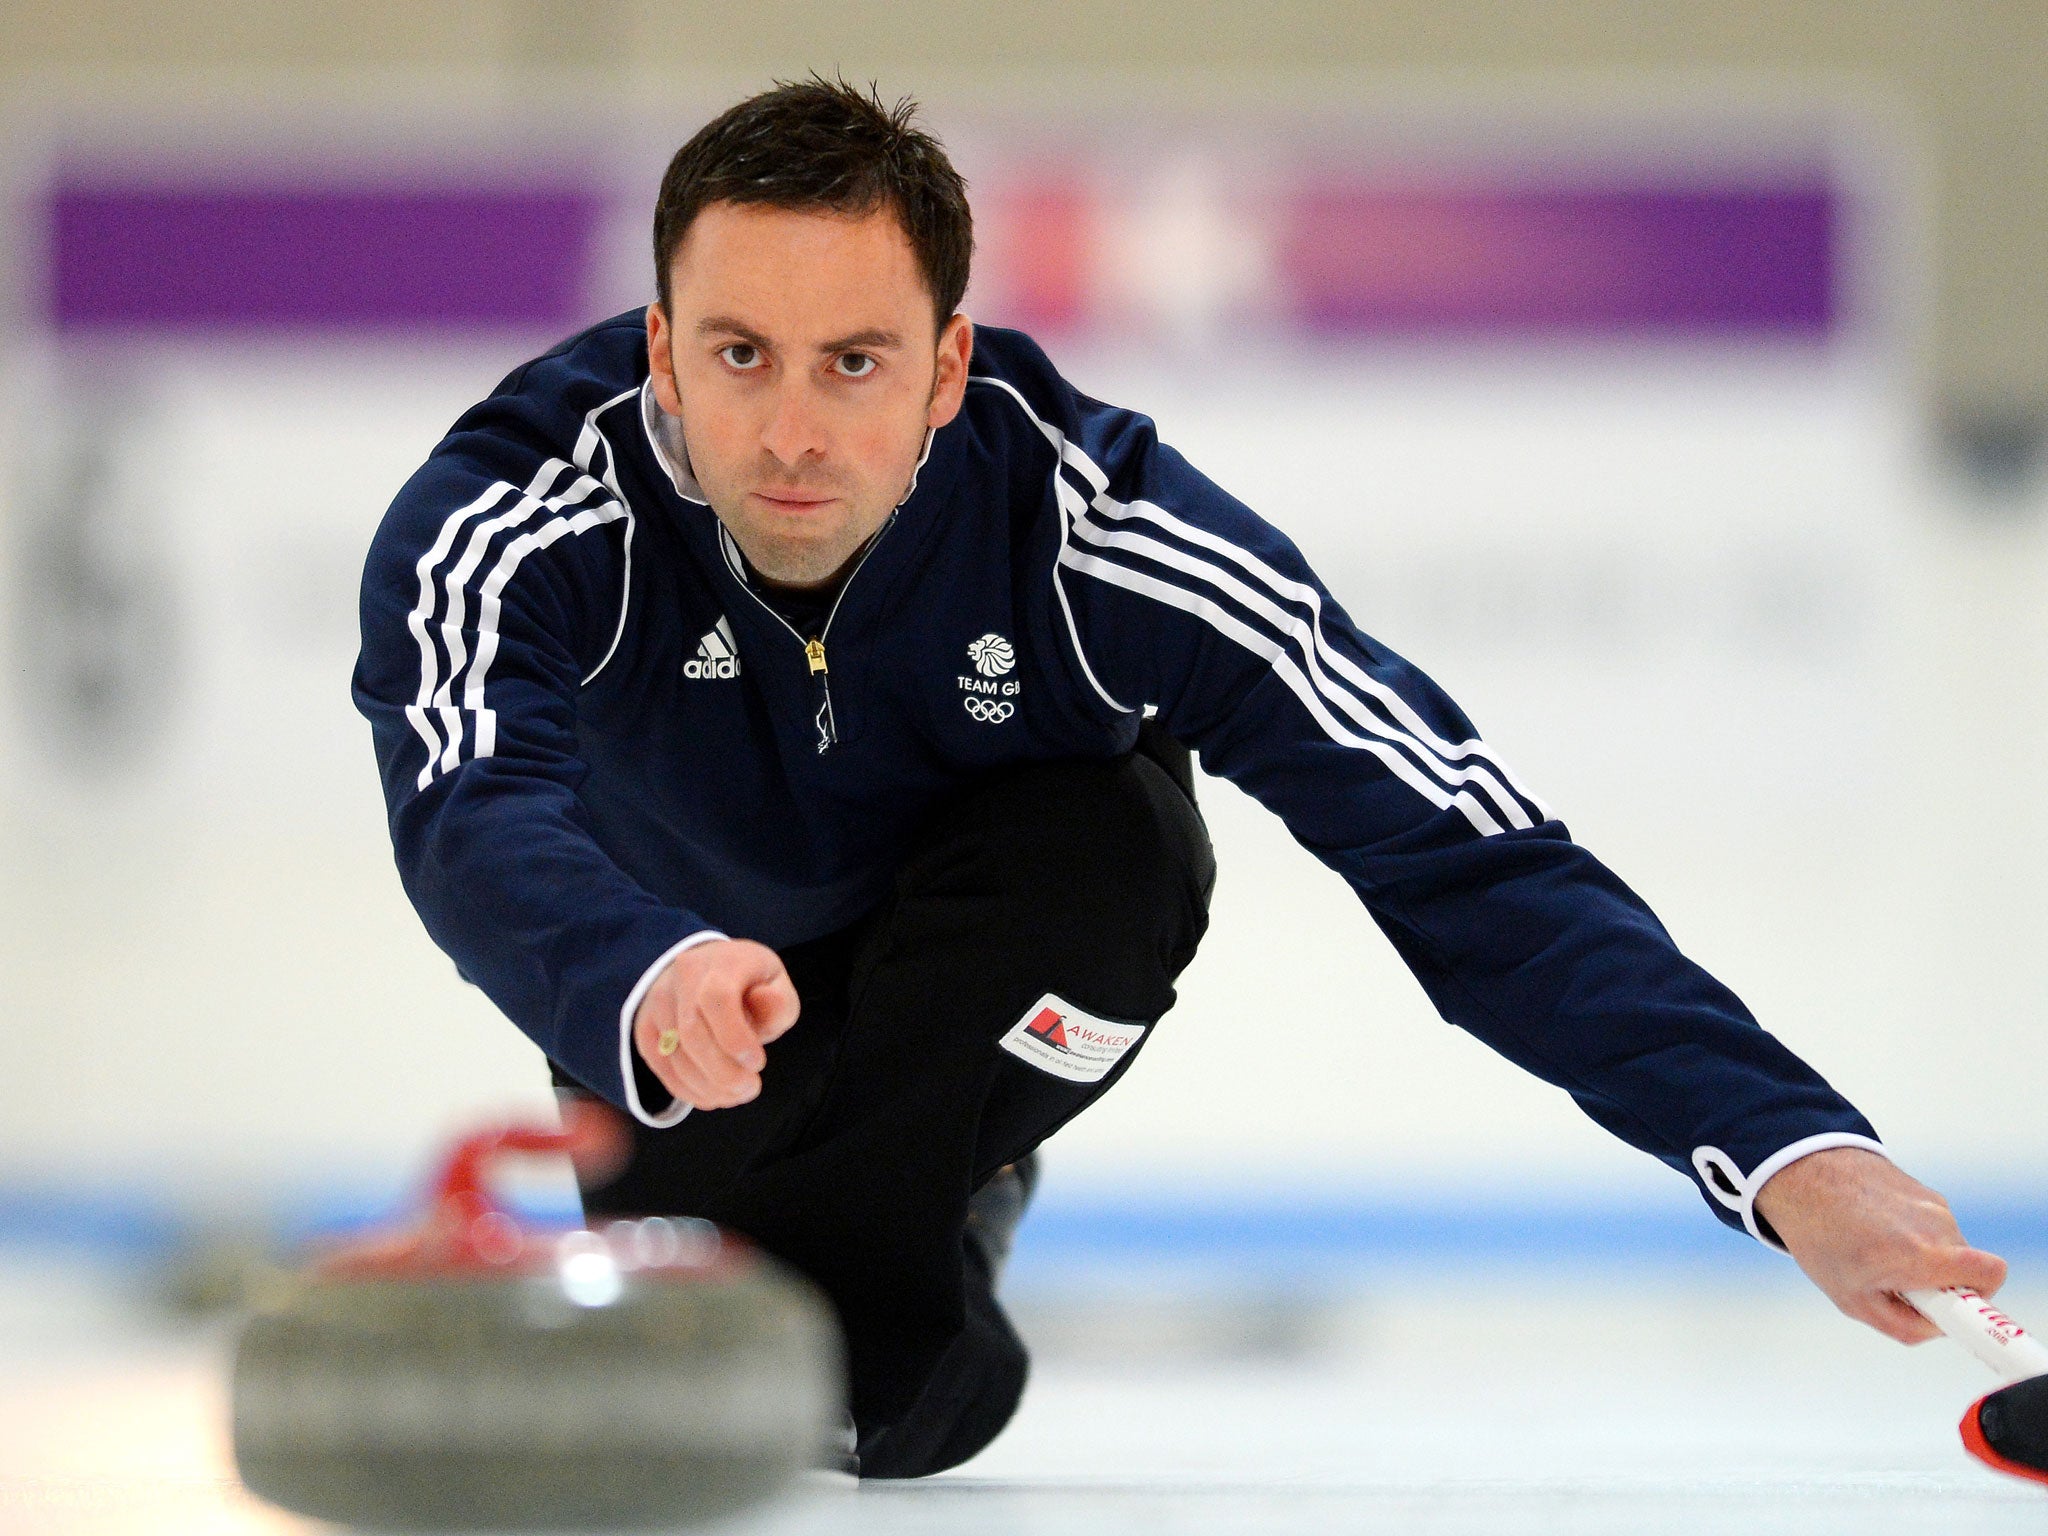 David Murdoch will lead Team GB's curling team in the Winter Olympics